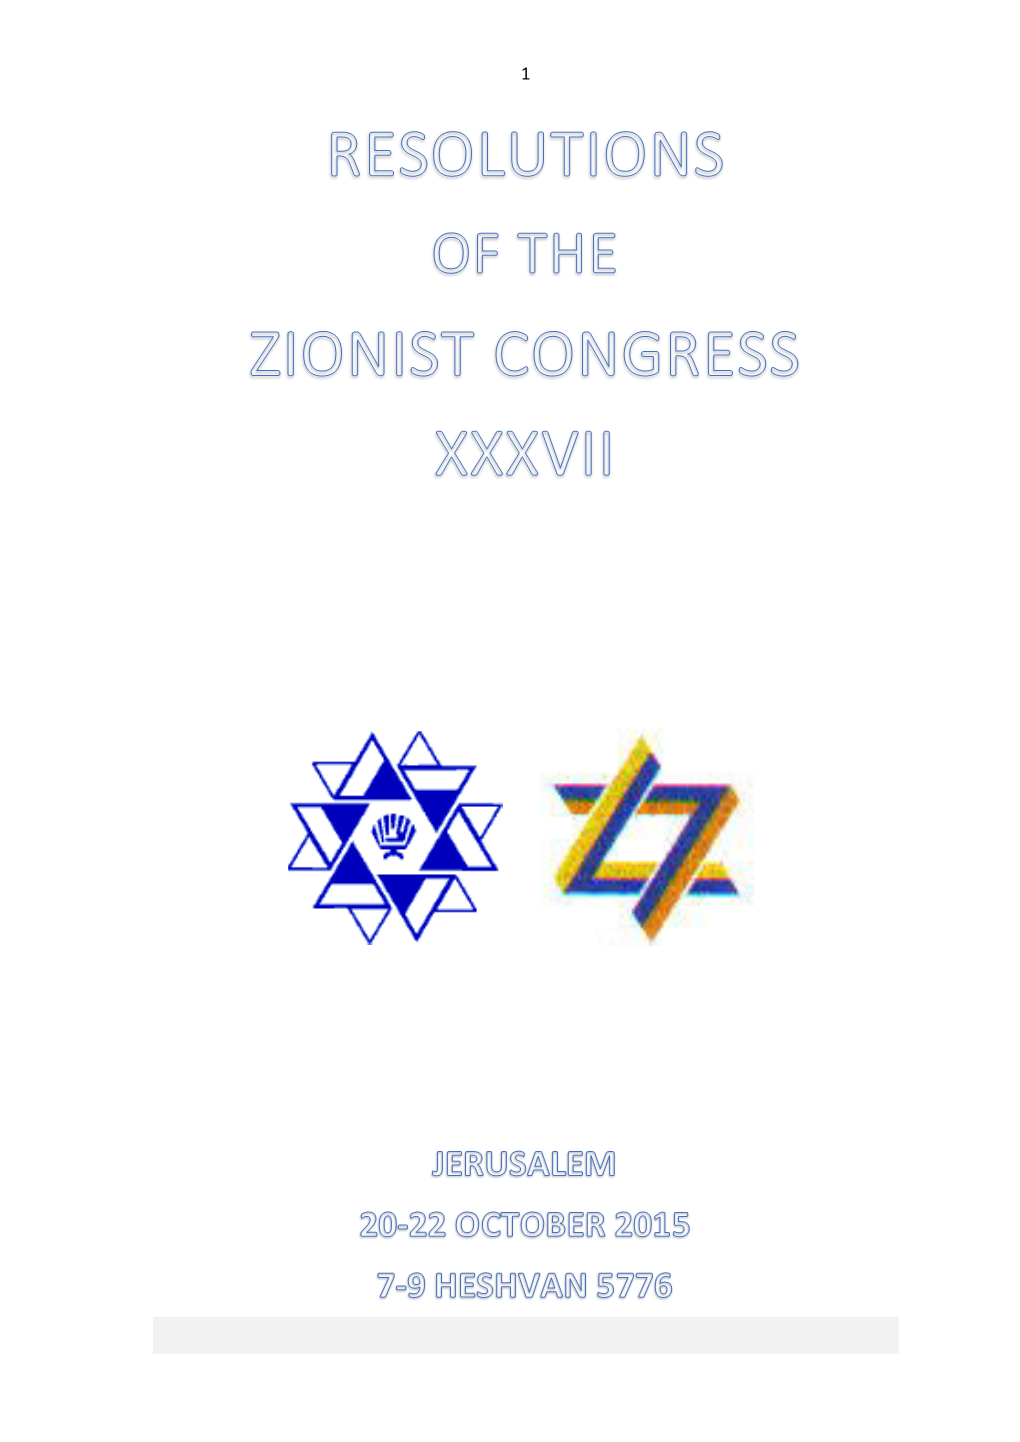 Resolutions of the Zionist Congress Xxxvii